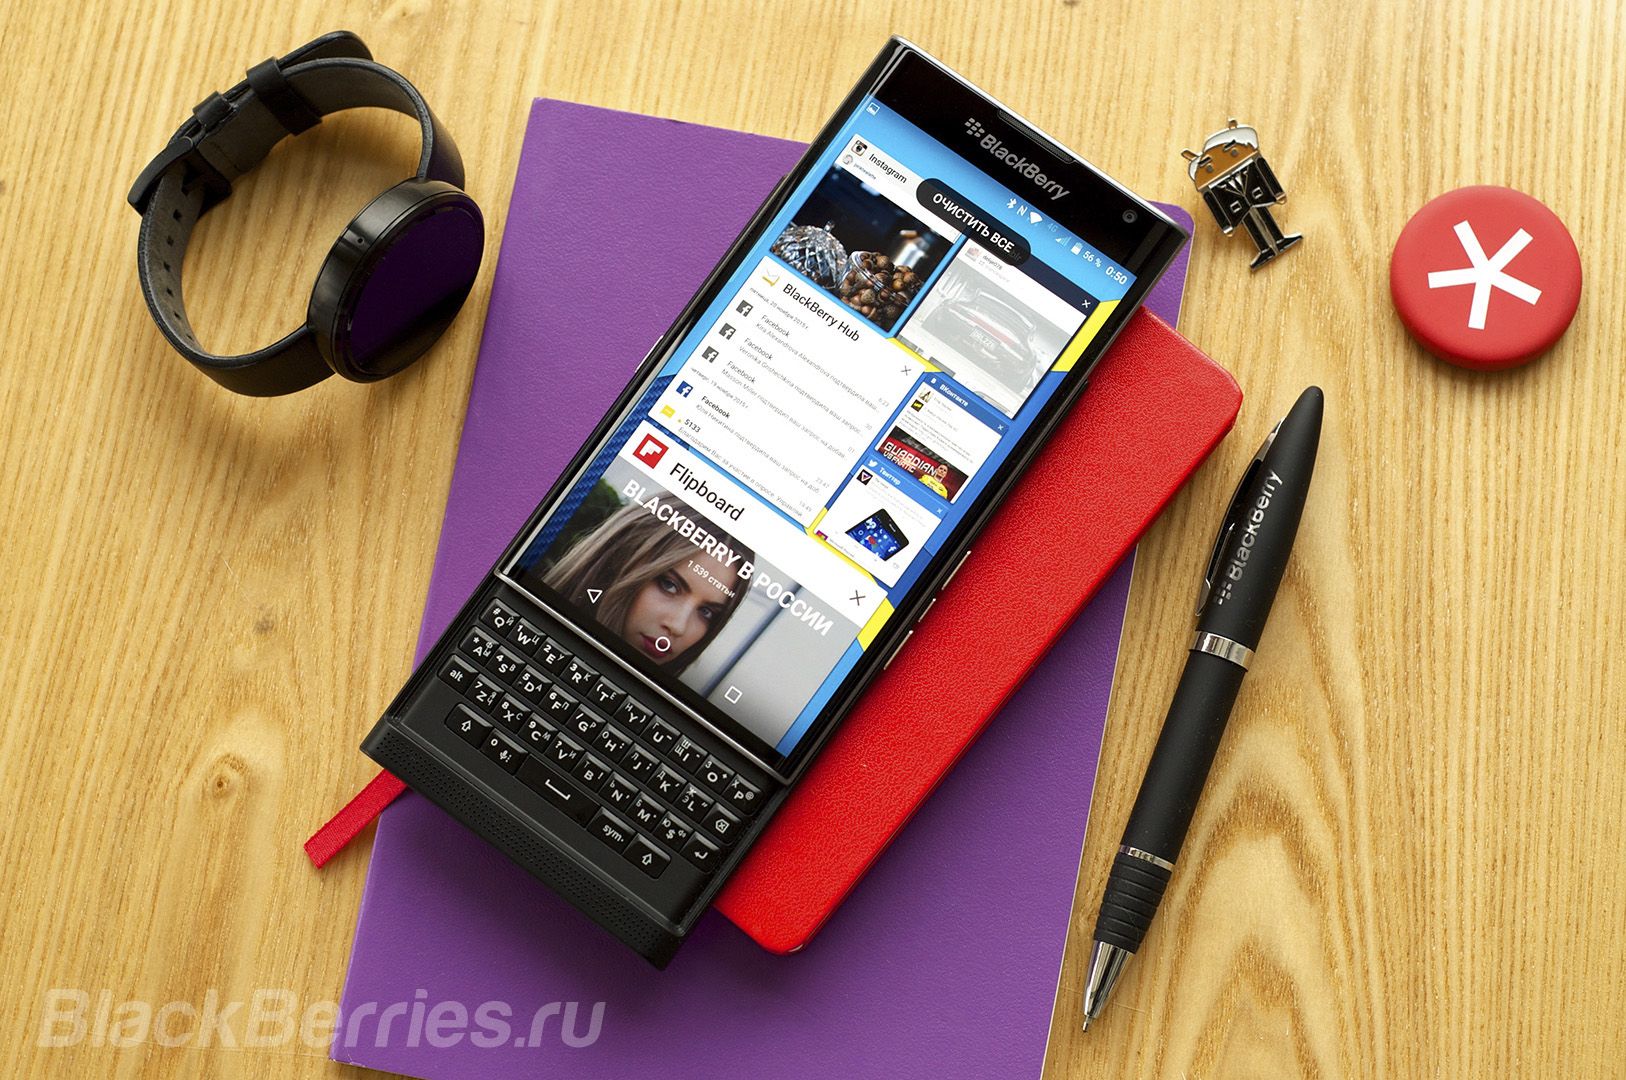 BlackBerry-Priv-23-11-05